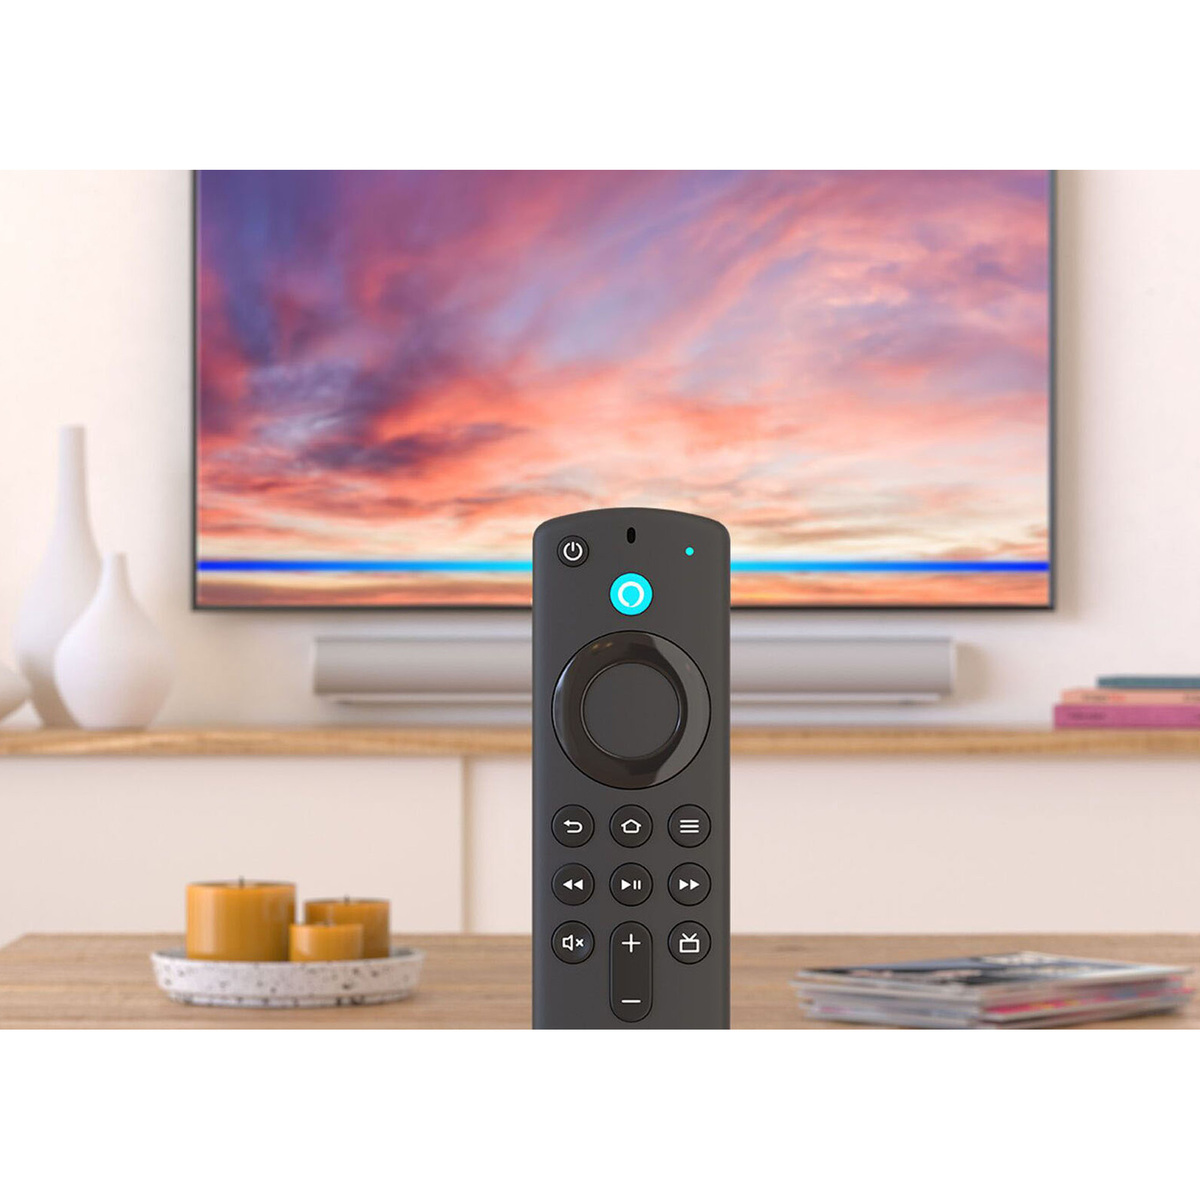   Fire TV Stick 4K Max with Alexa Voice Remote